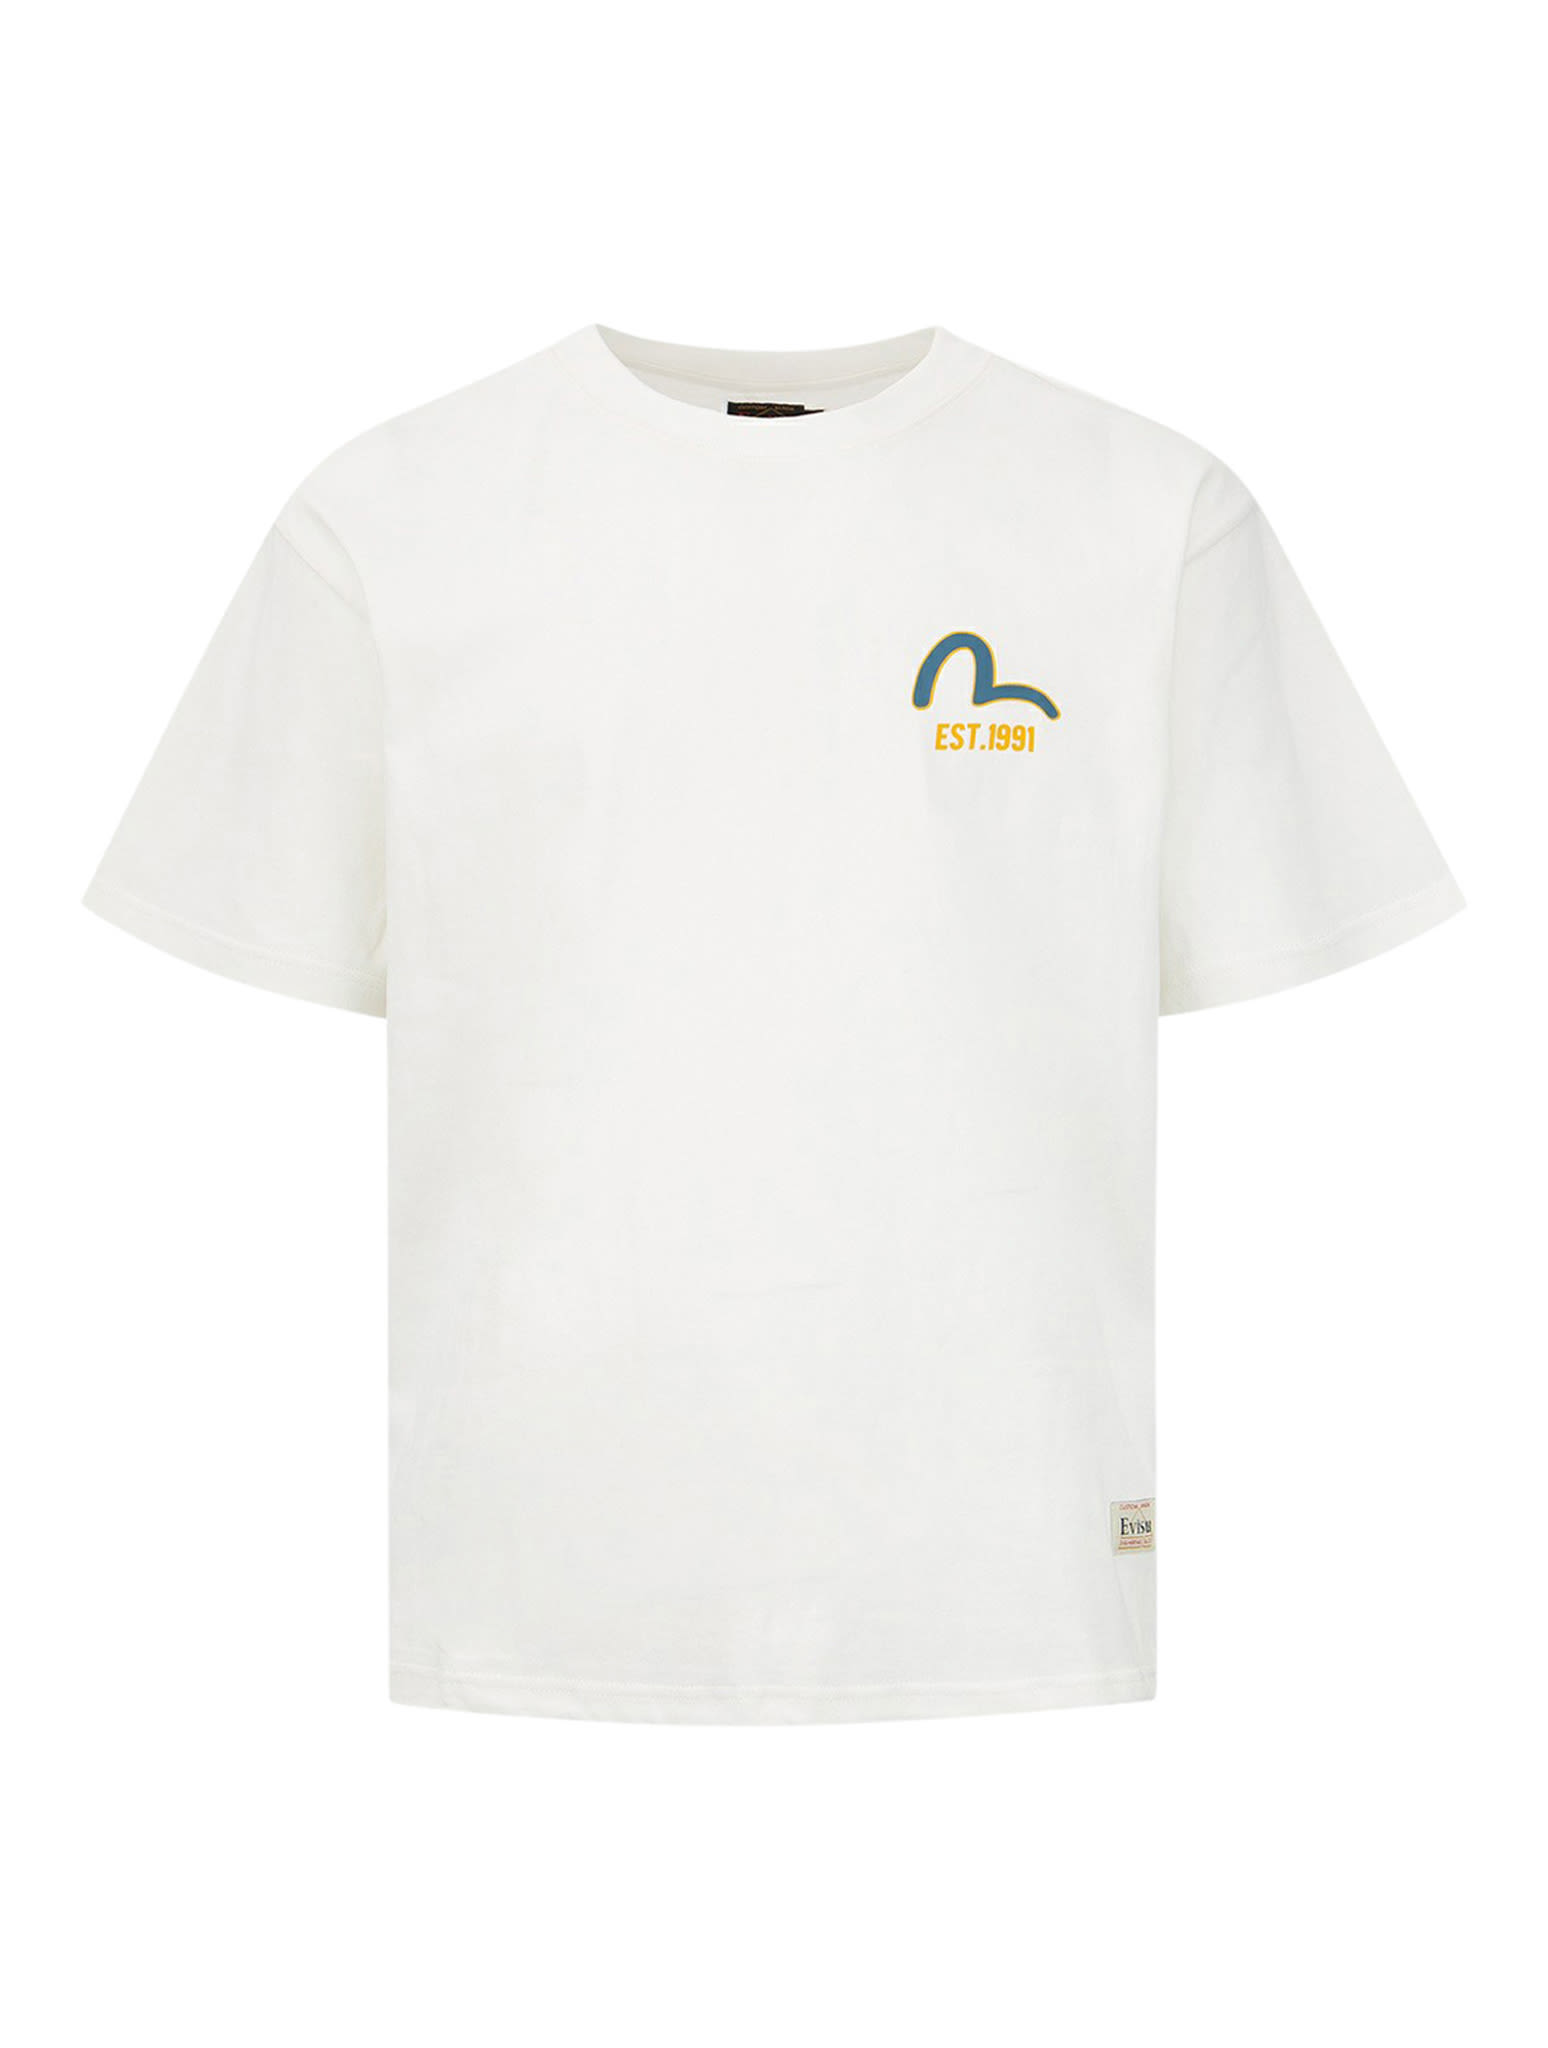 WIND AND SEA S/S T-shirt Navy-Sand XL Tシャツ/カットソー(半袖/袖なし) オンラインネットワーク